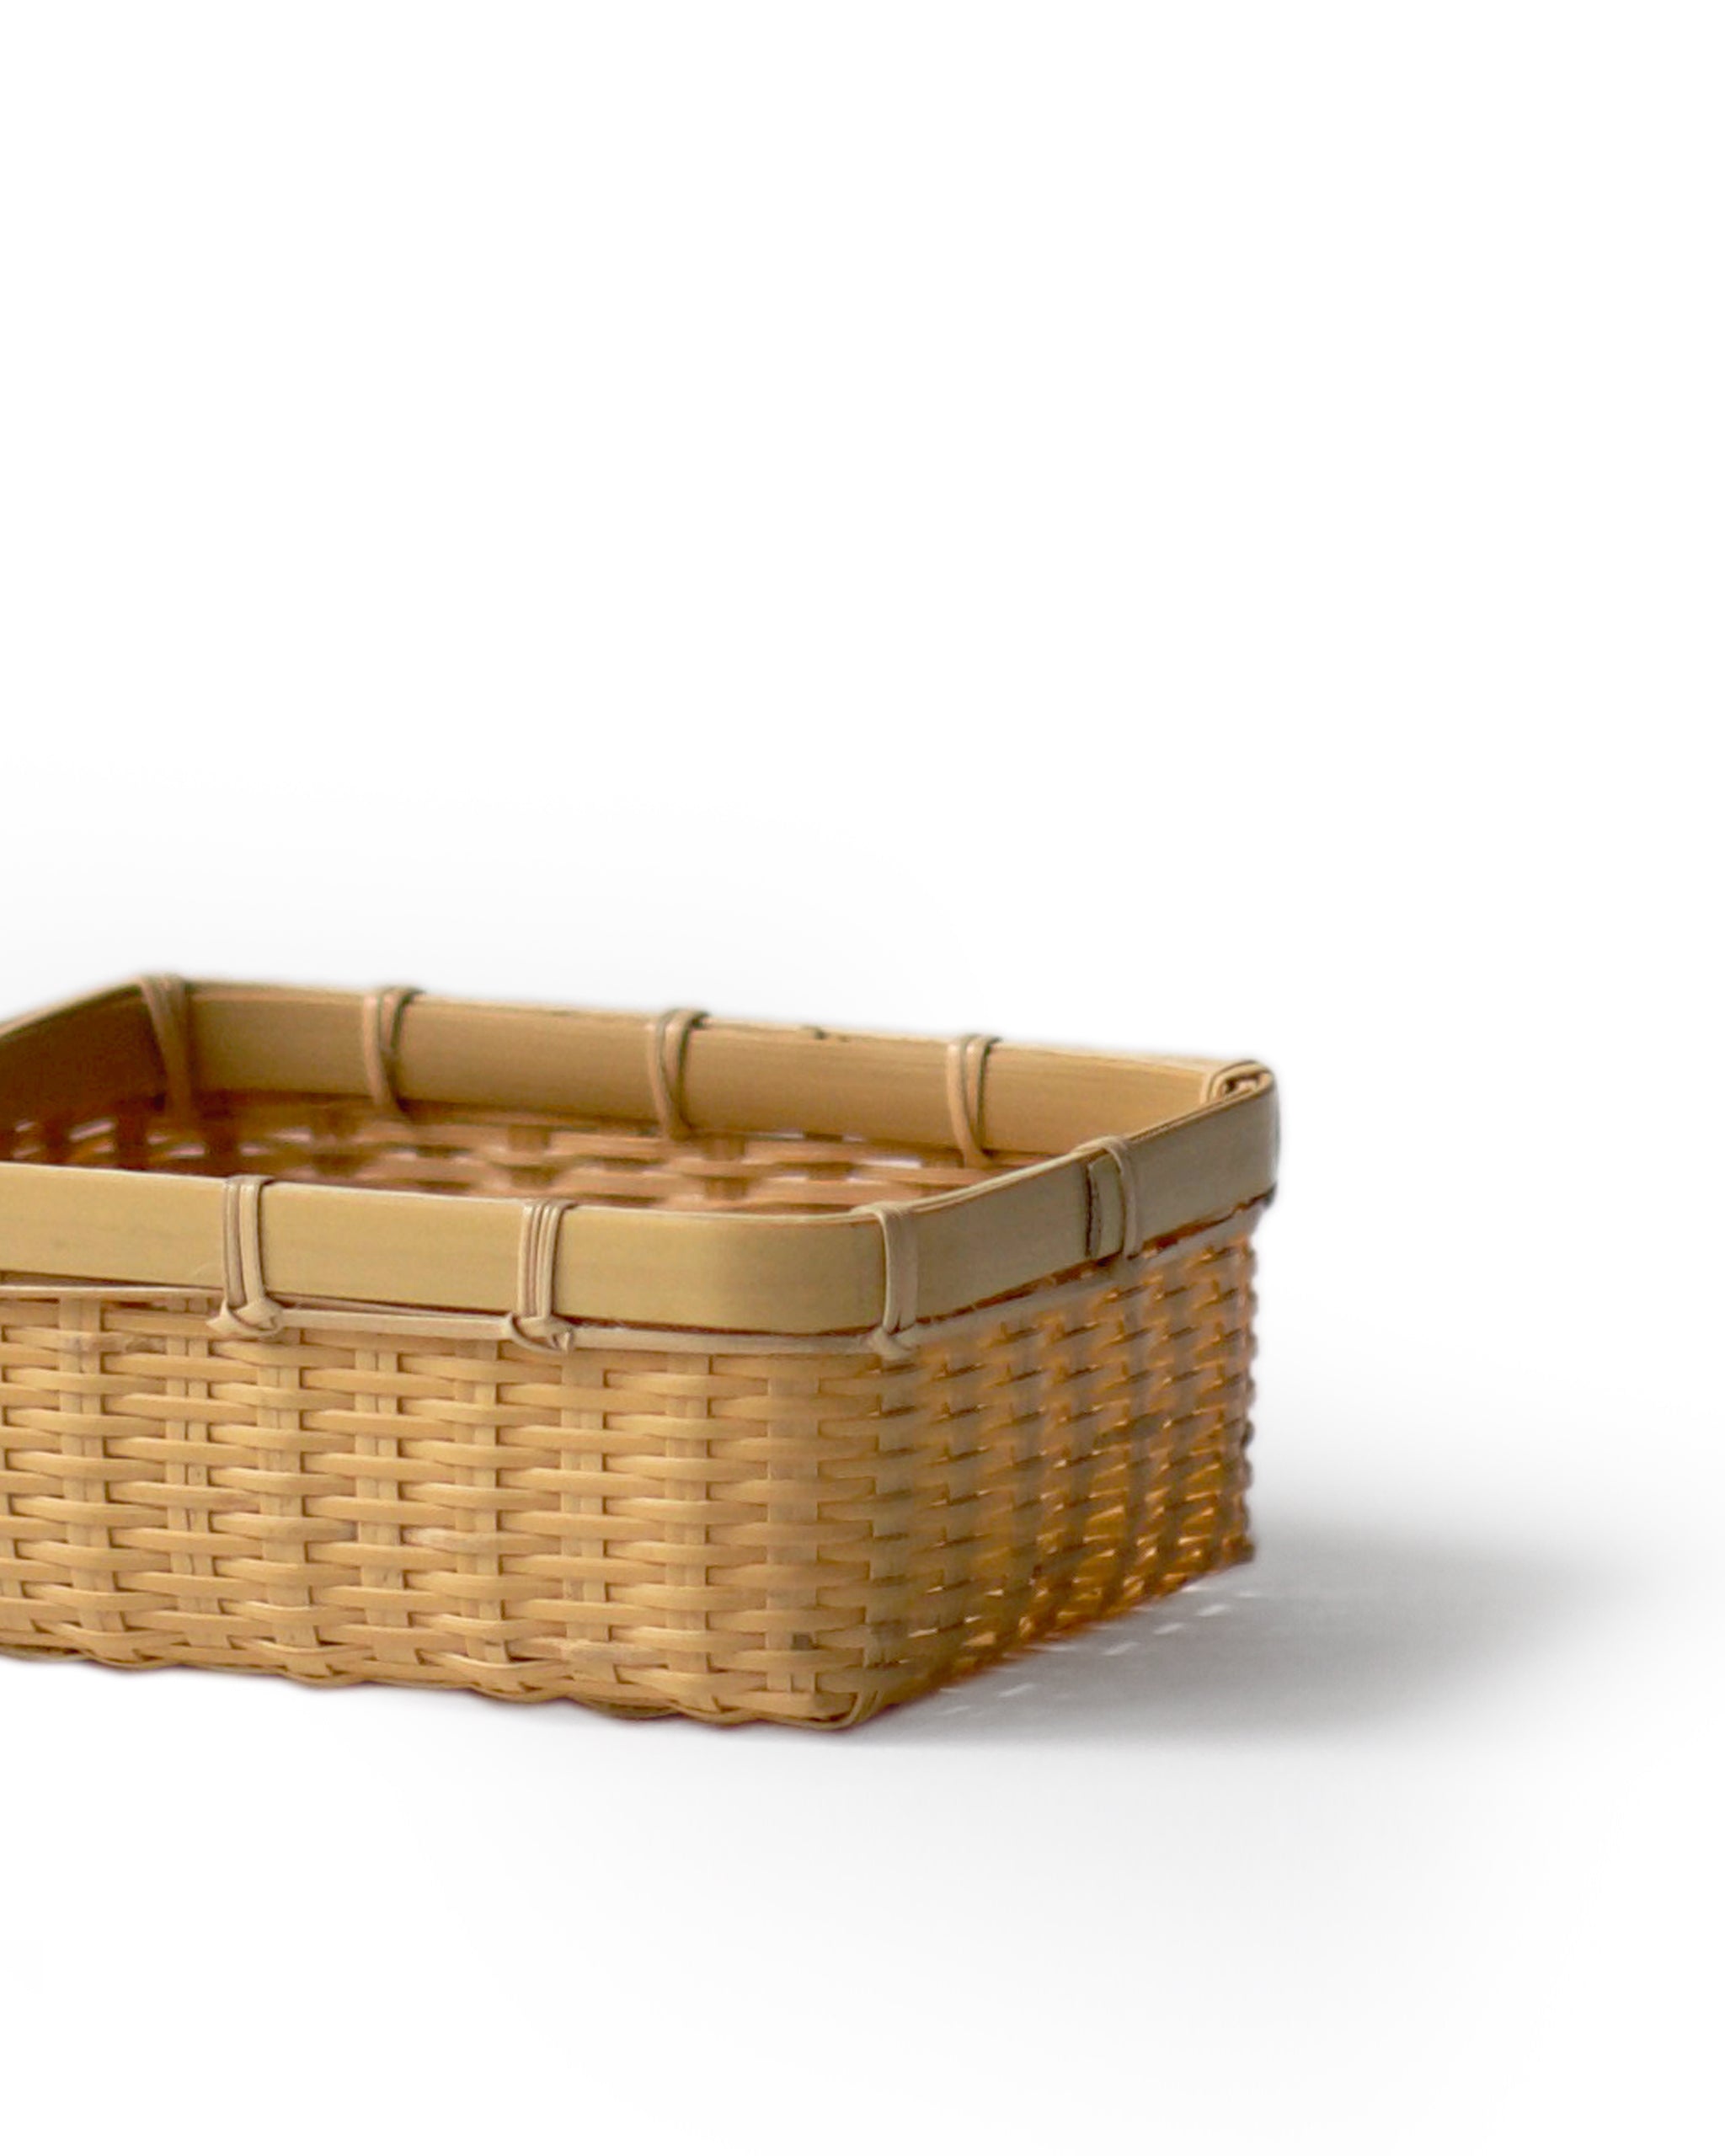 Cropped image of small woven rectangular basket by Kohchosai Kosuga against white background. 